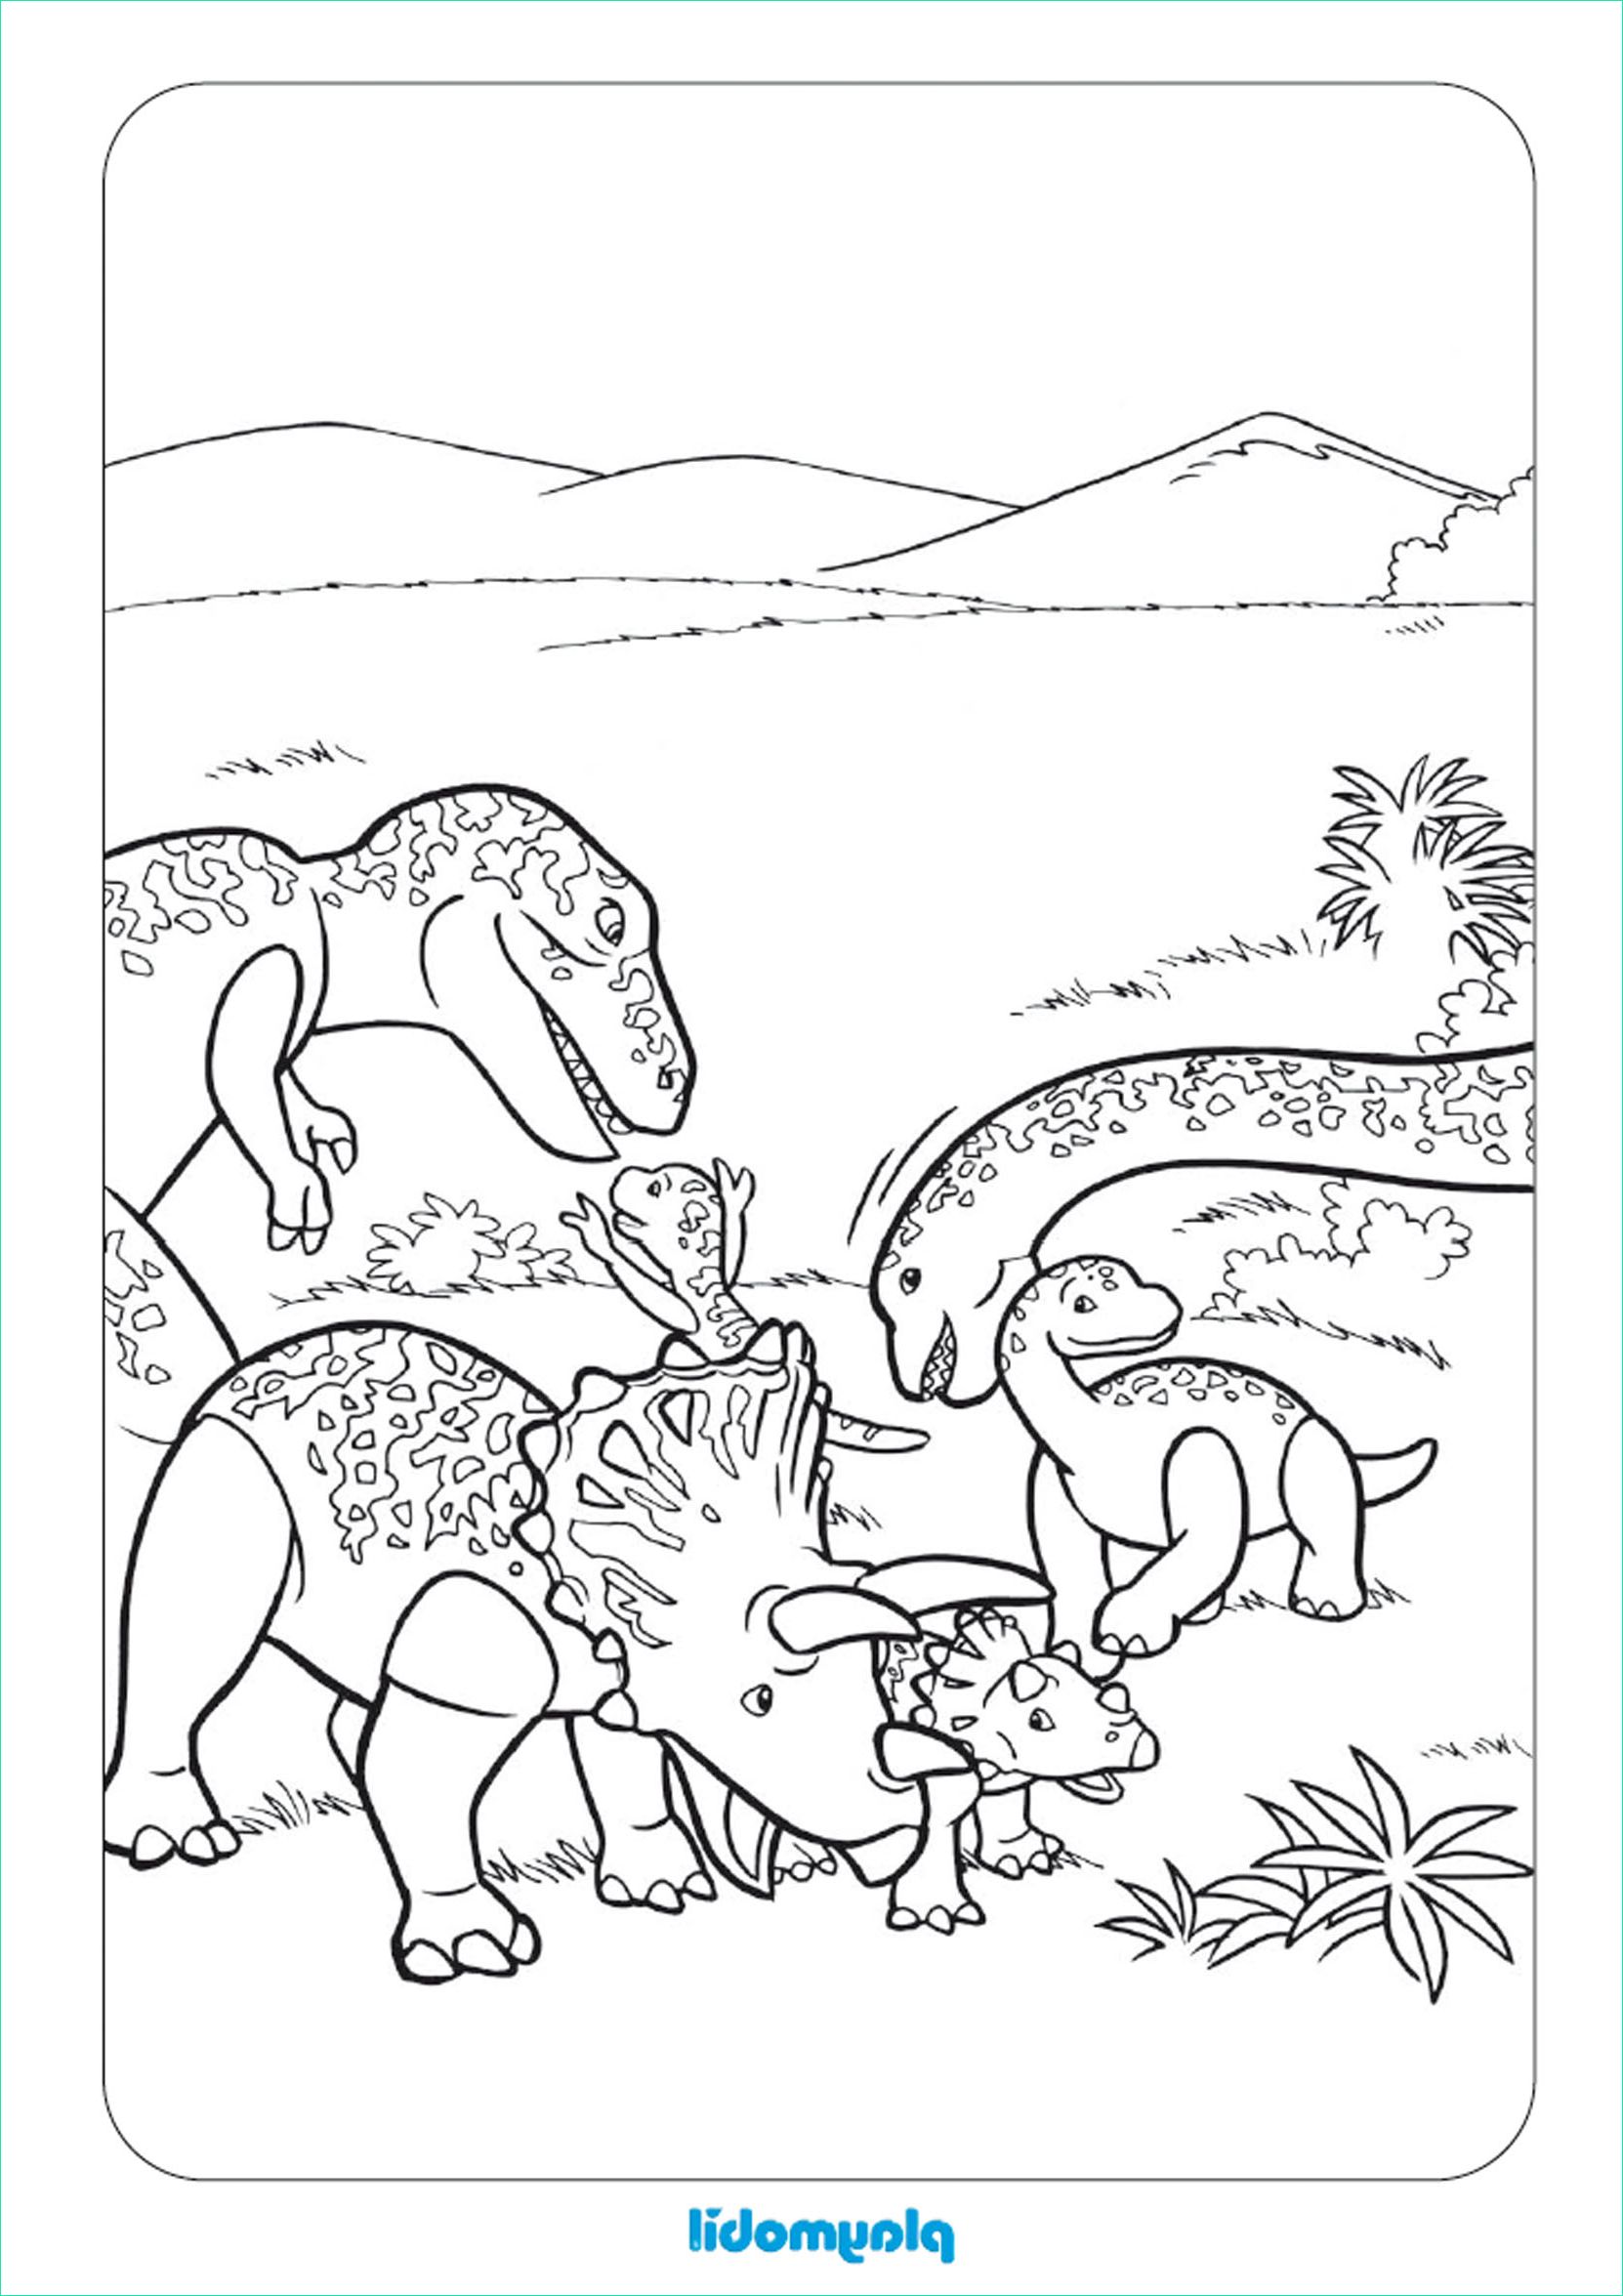 Dessin De Dinosaure à Colorier Impressionnant Photos 204 Dibujos De Dinosaurios Para Colorear Oh Kids